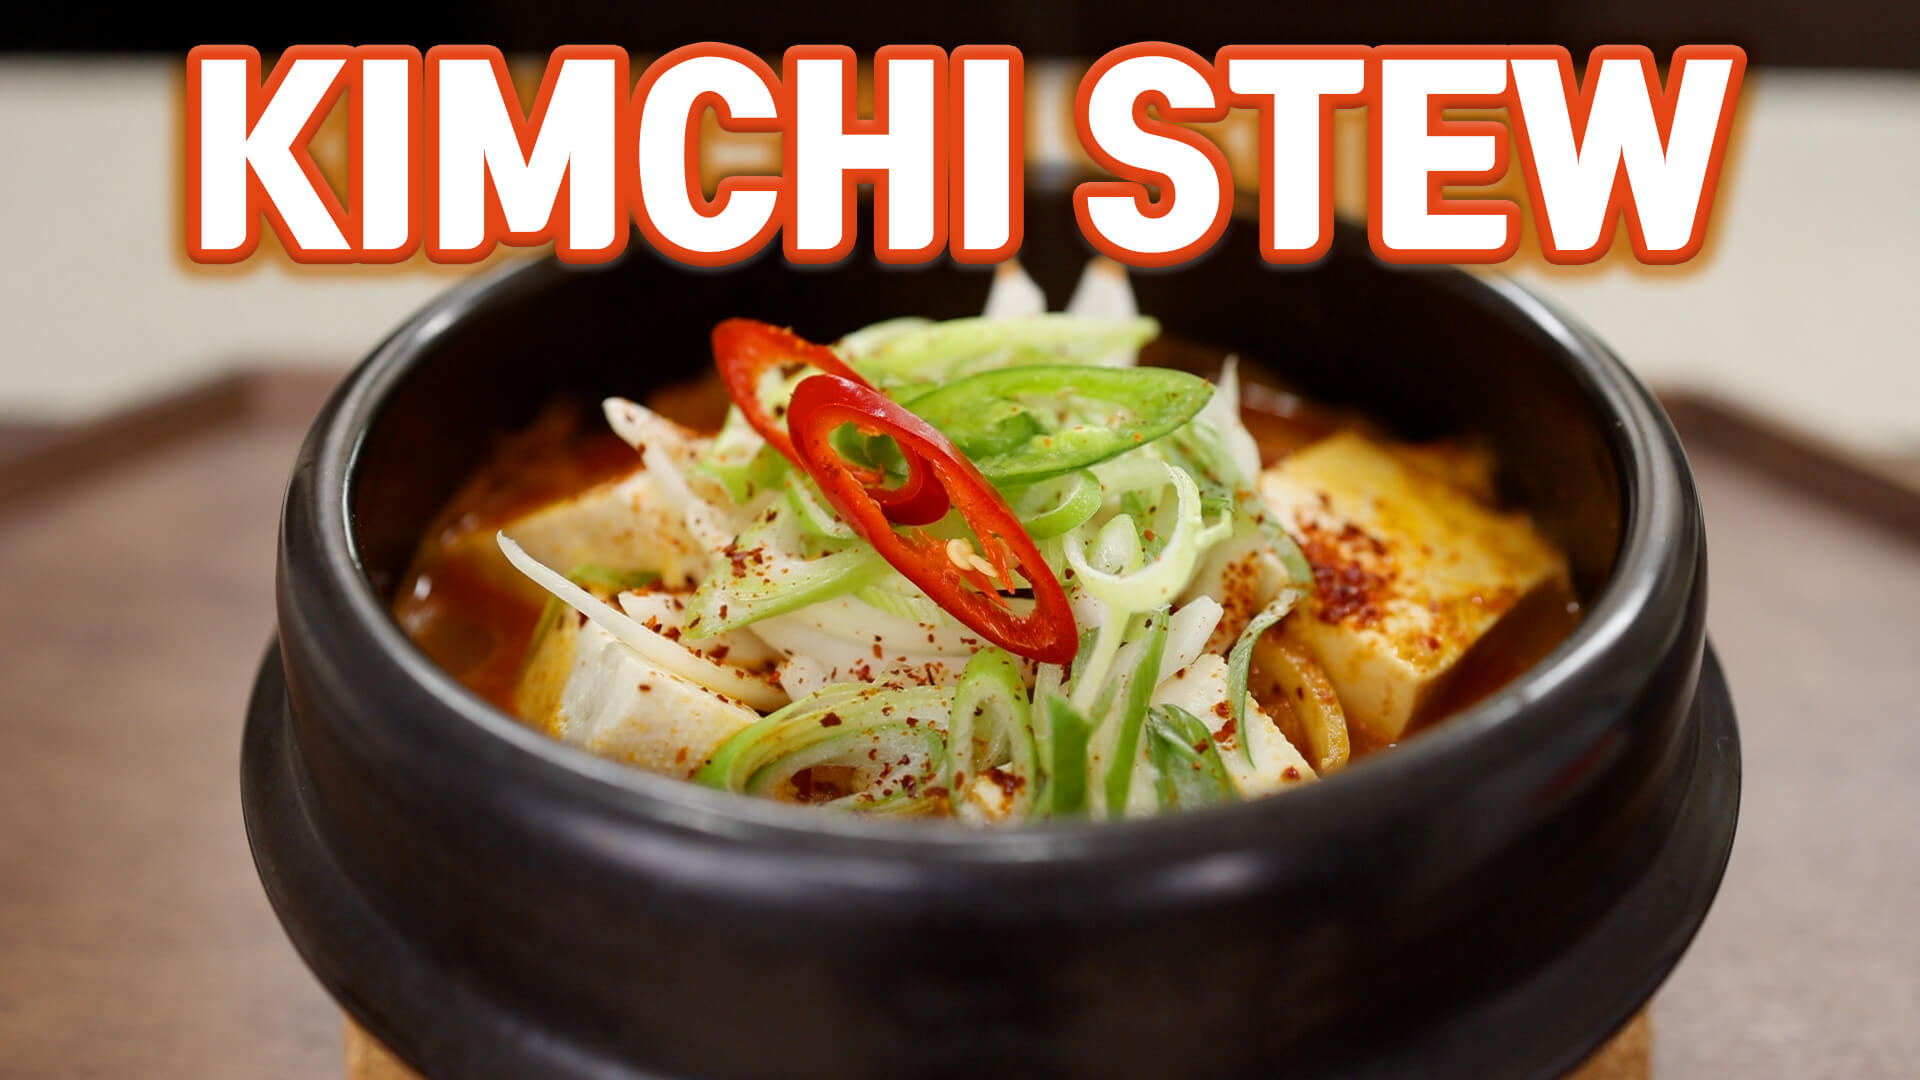 Kimchi Stew with Vegetable (Kimchi Jjigae)